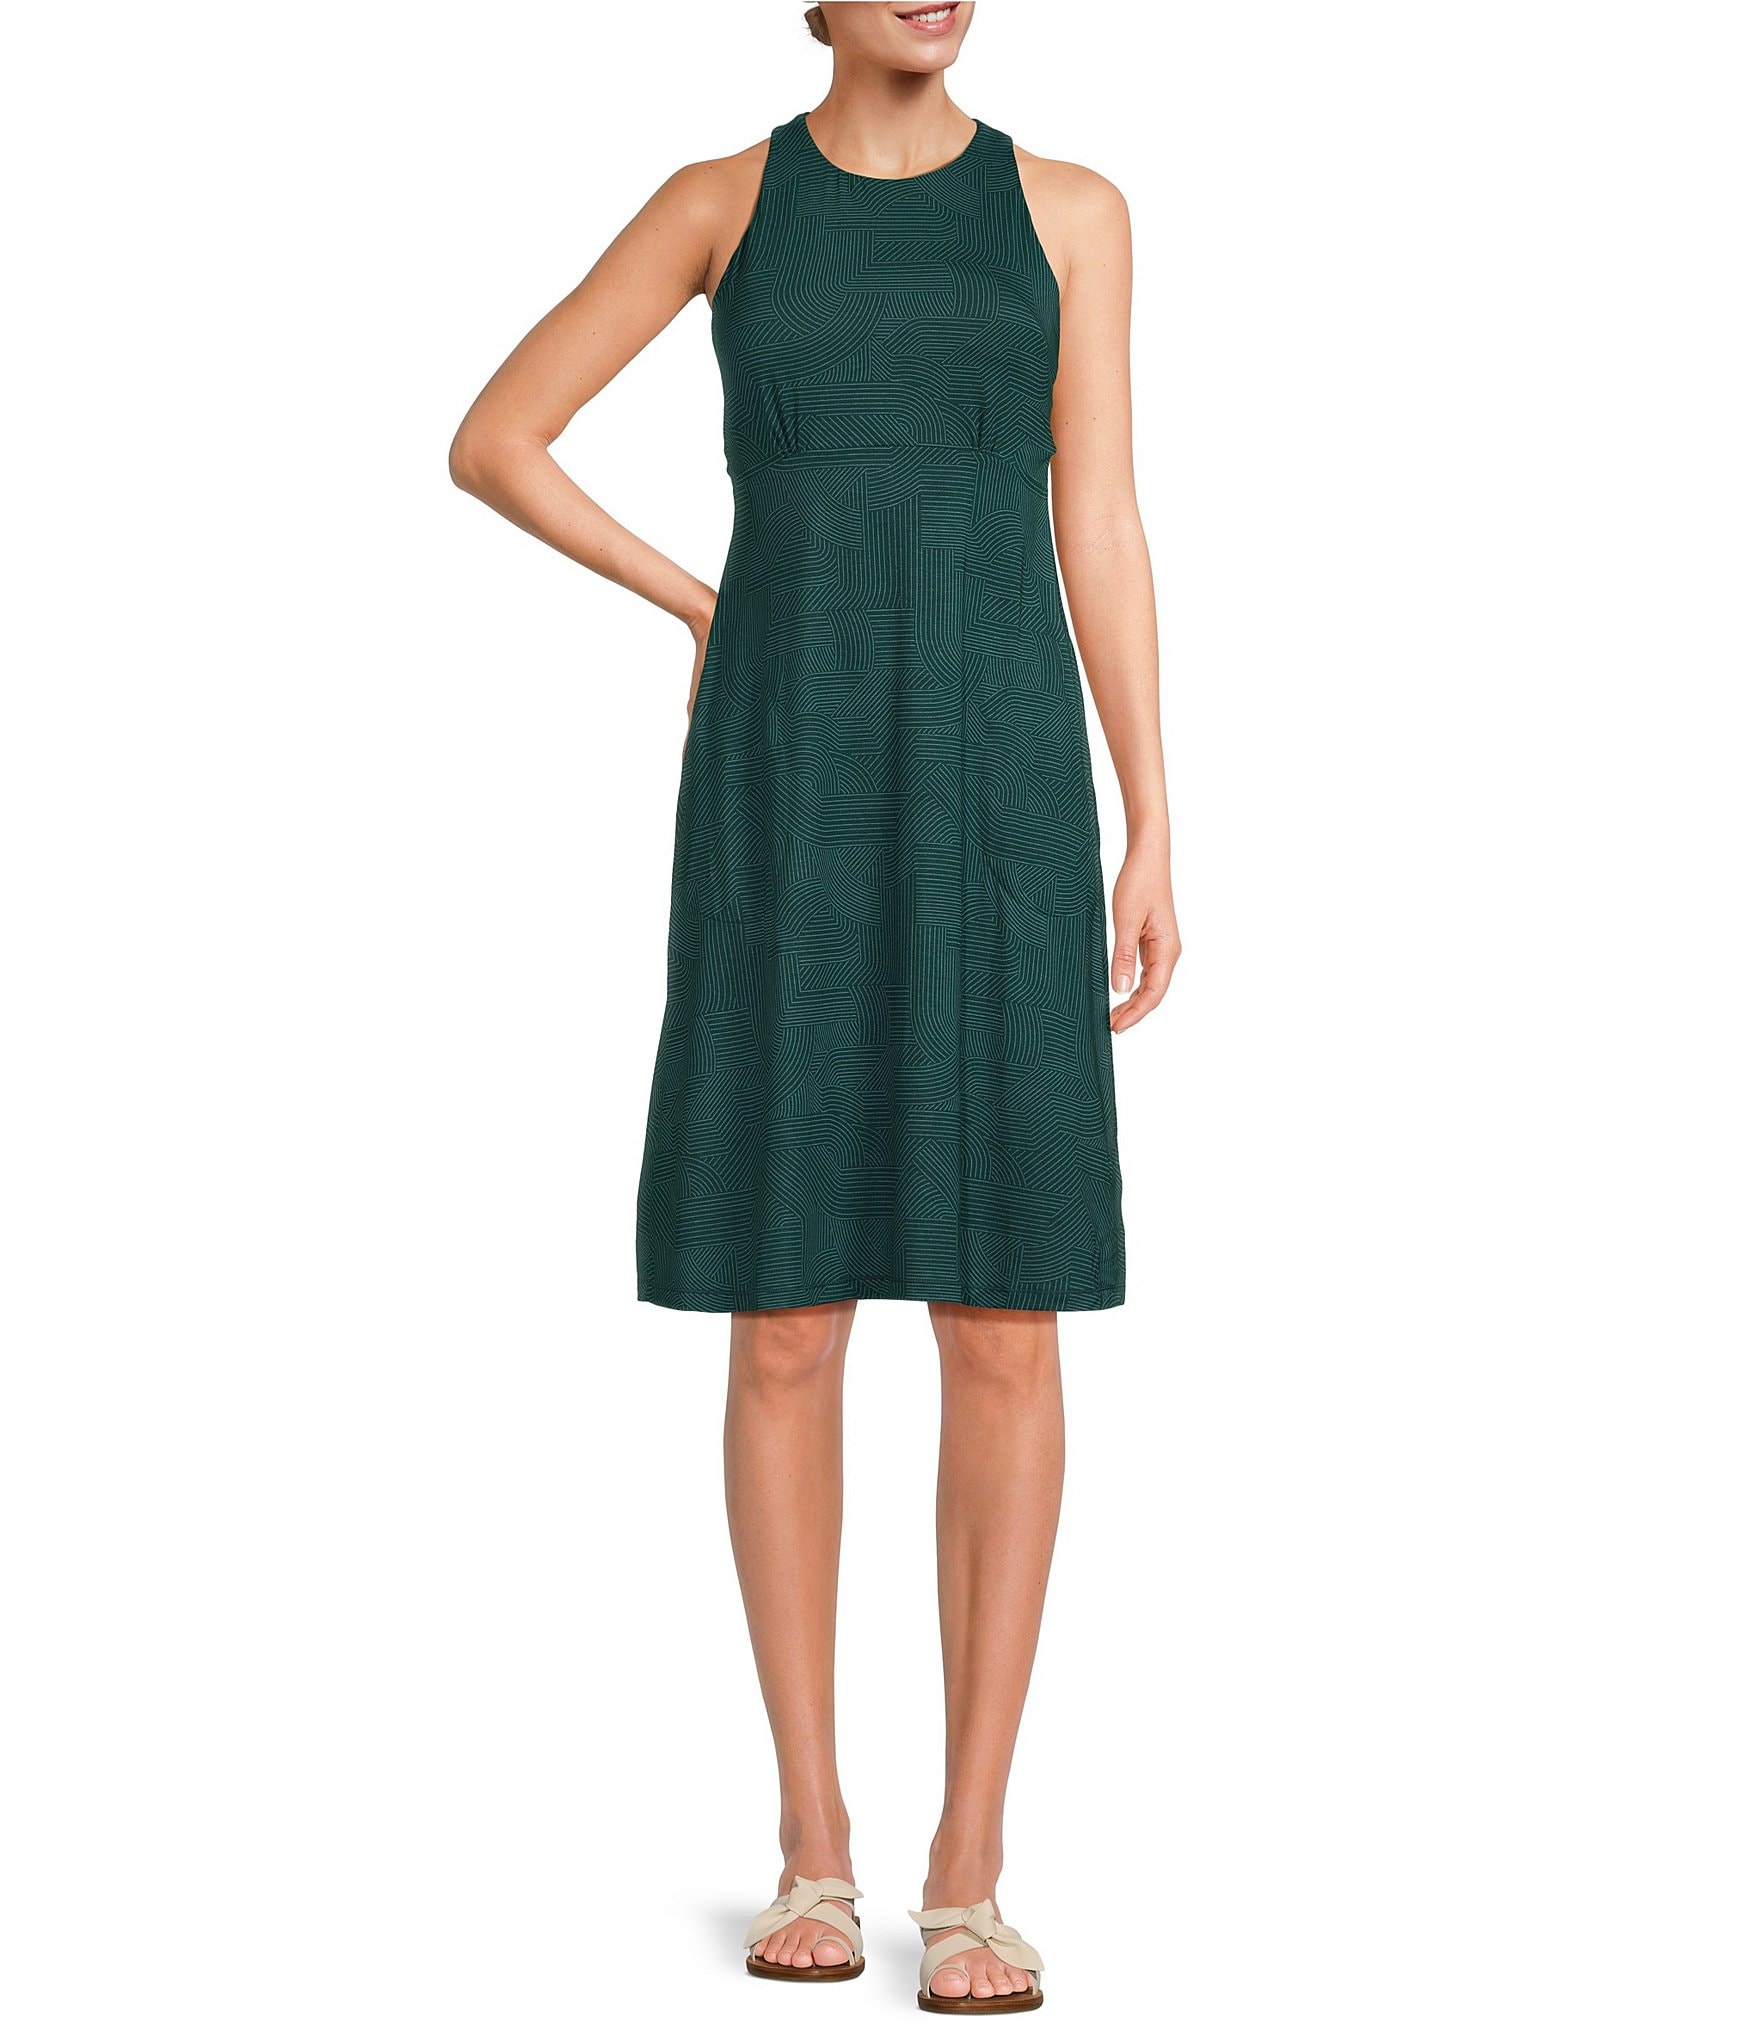 Cheap PrAna Womens Dresses Canada - PrAna Discount Store